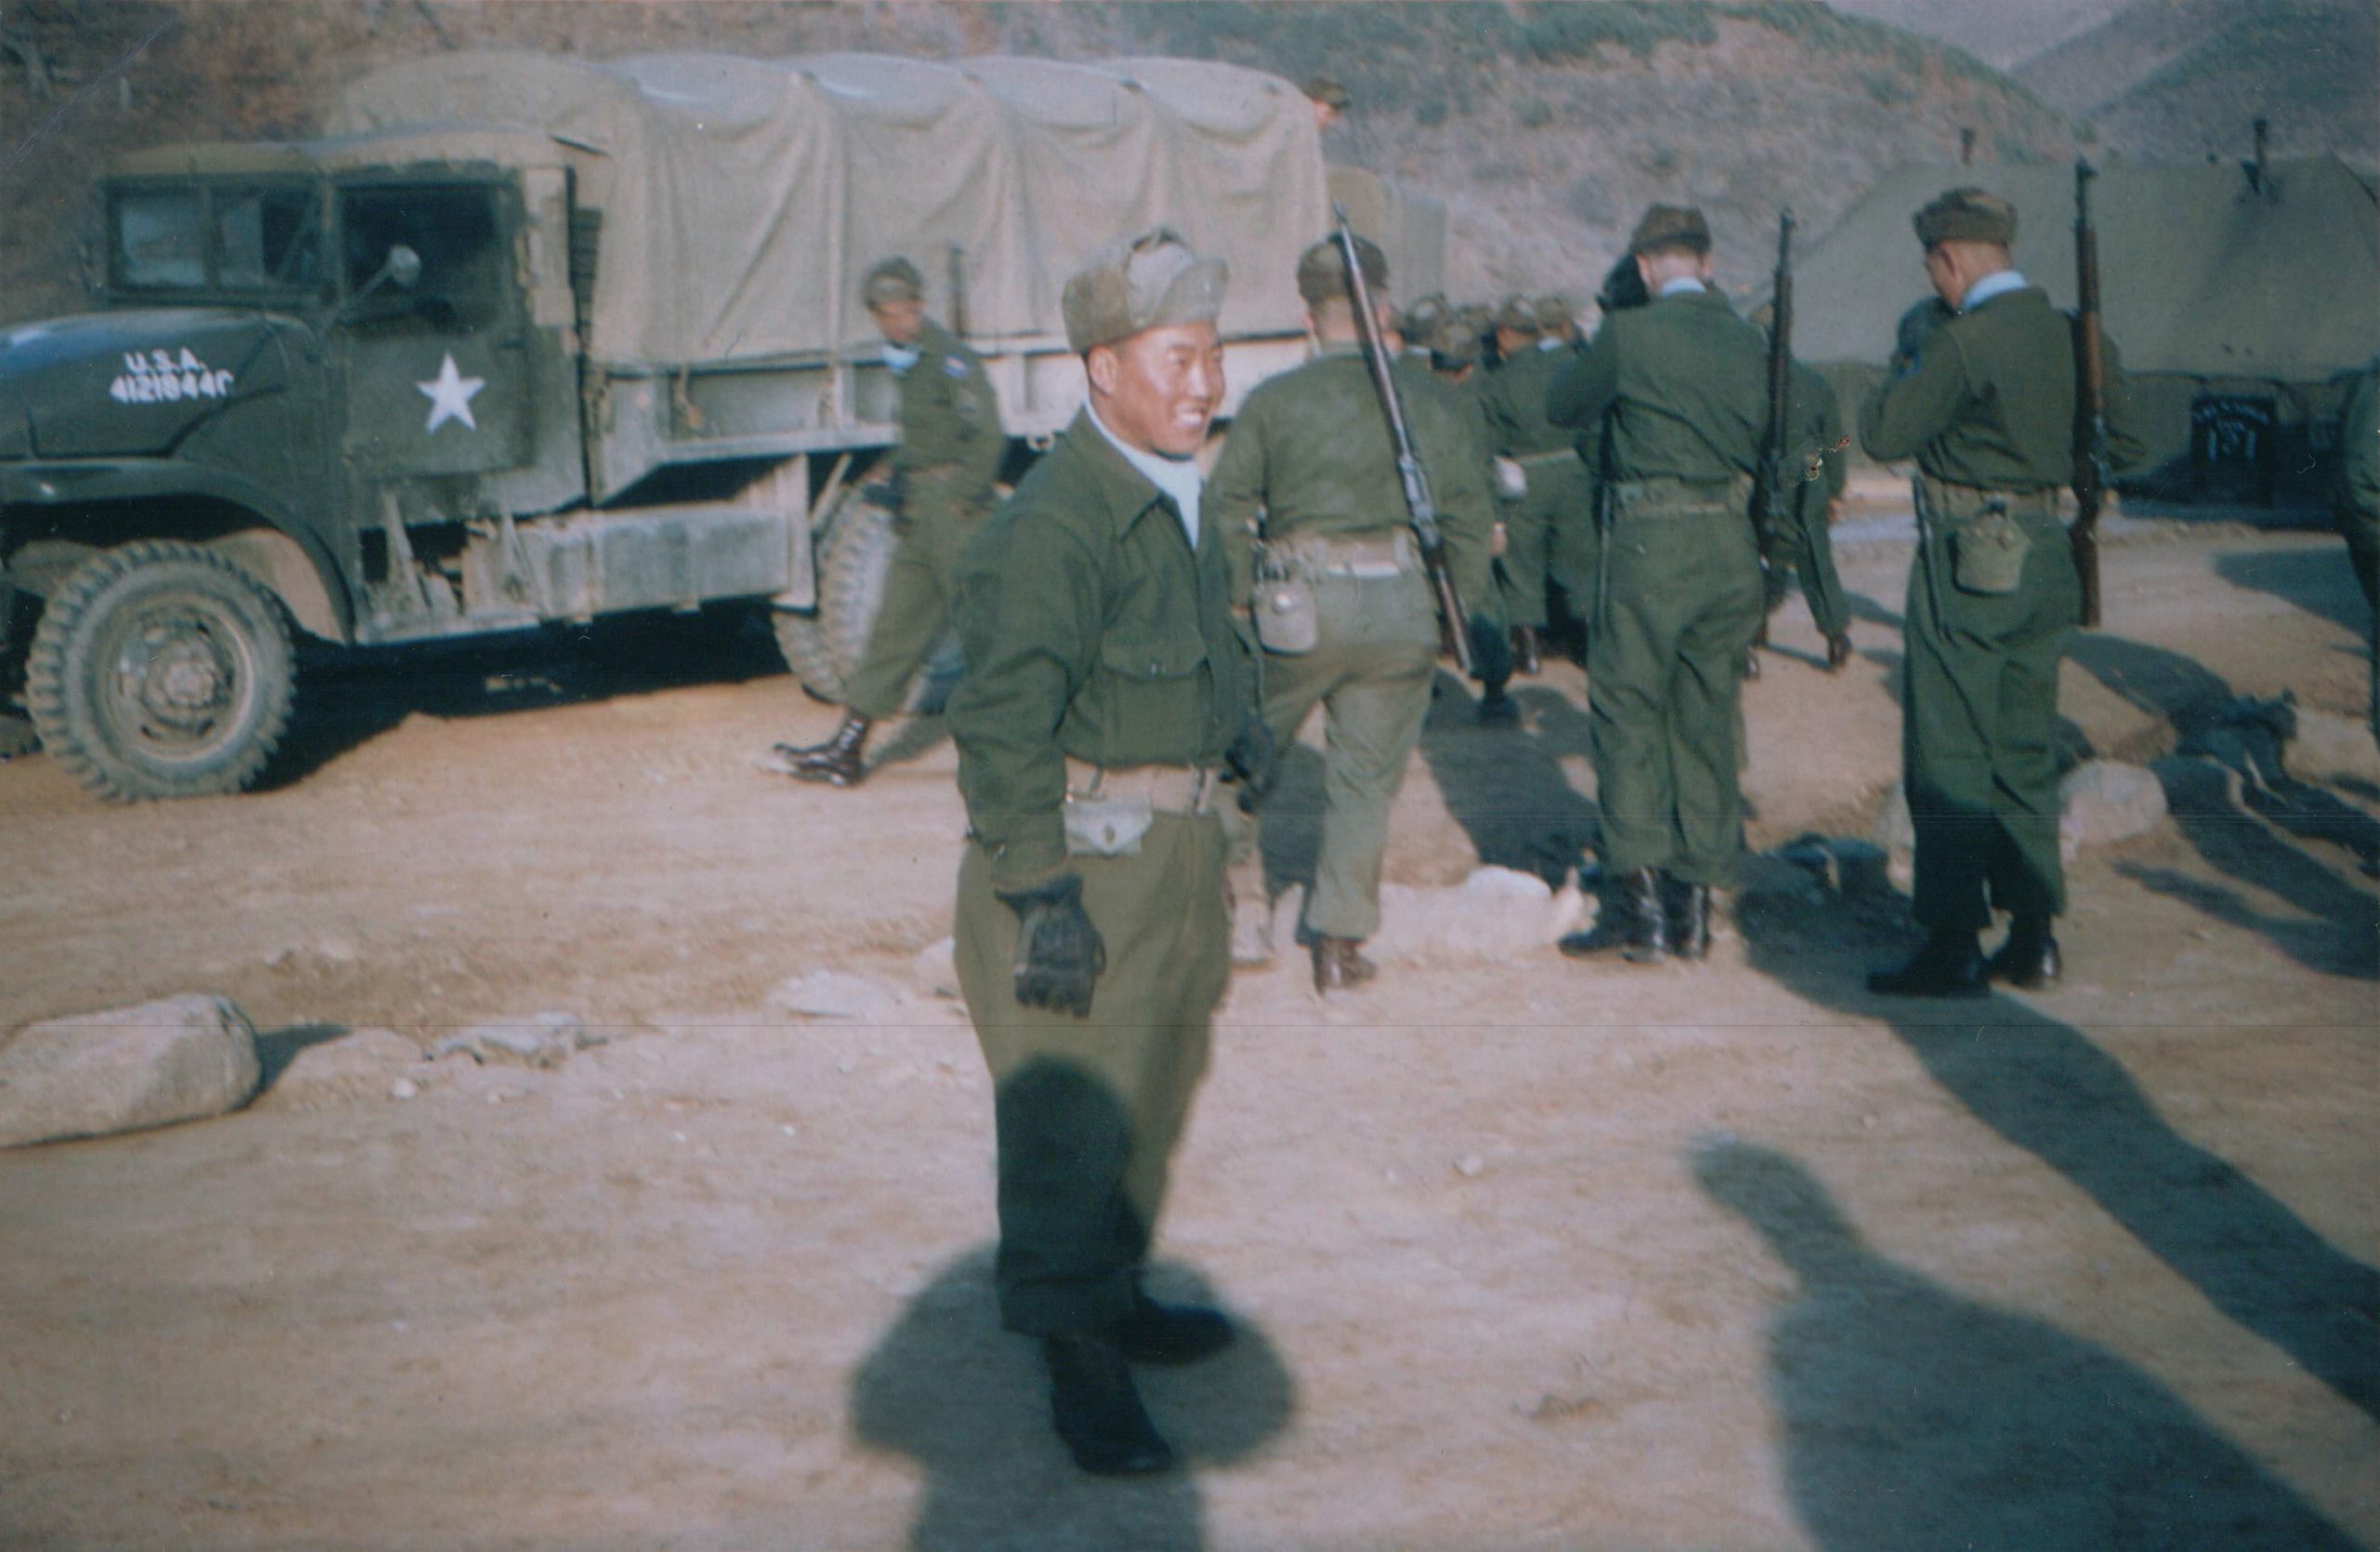 A KATUSA smiling in his military uniform.